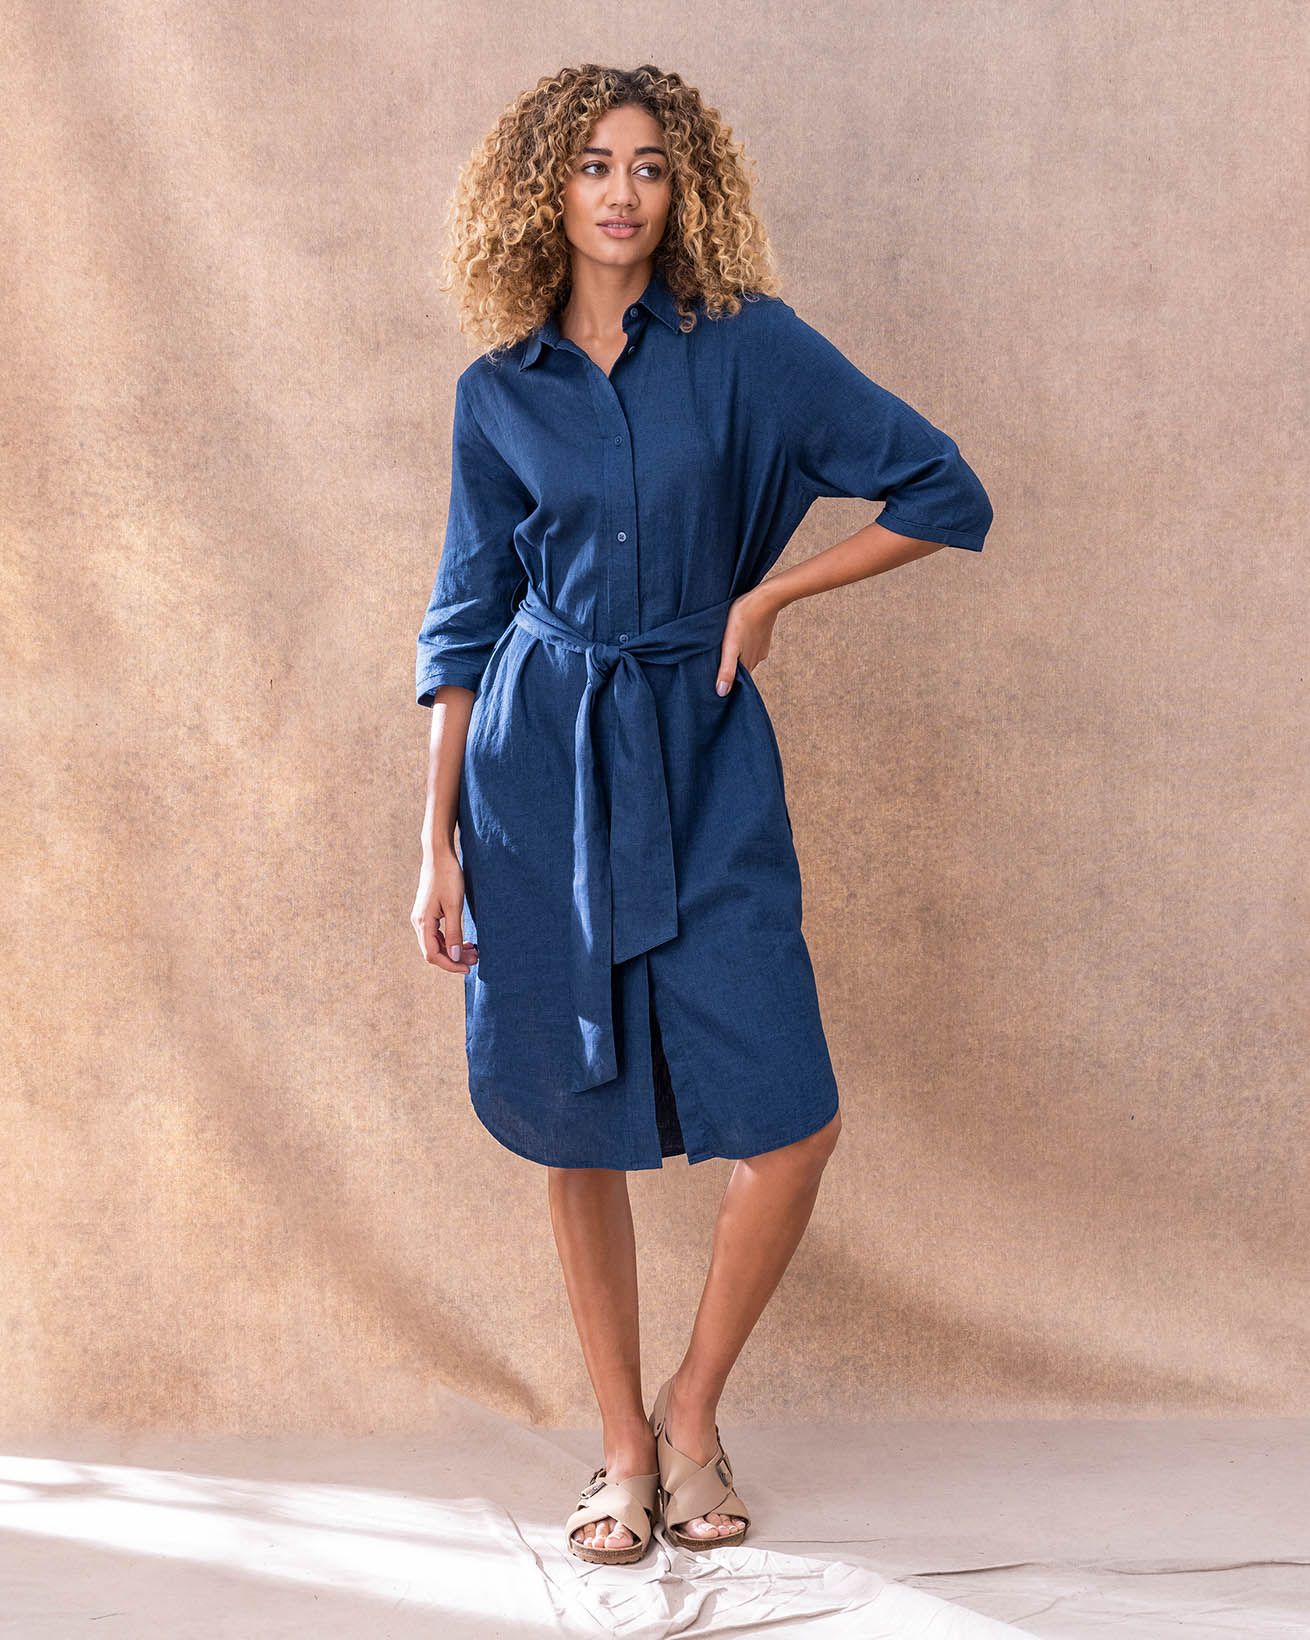 Kupretty Womens Vintage Cotton Linen A-line Dress Summer Casual